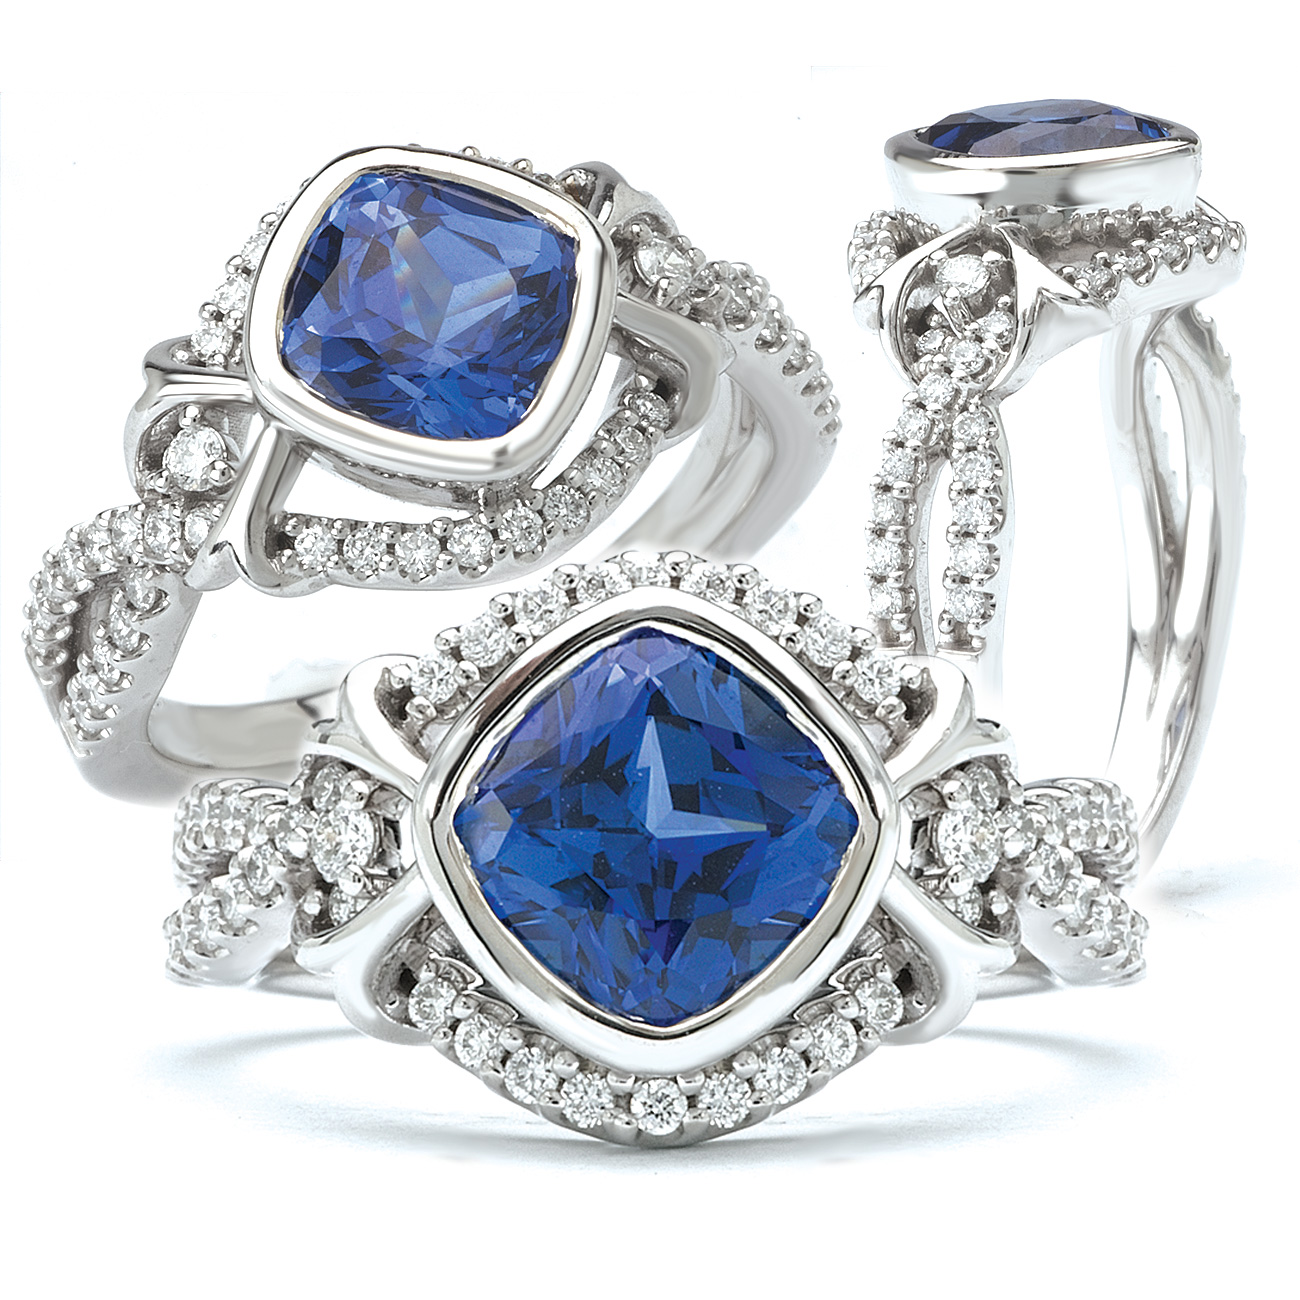 Custom Jewelry Design From Scratch - JewelryImpressions.com